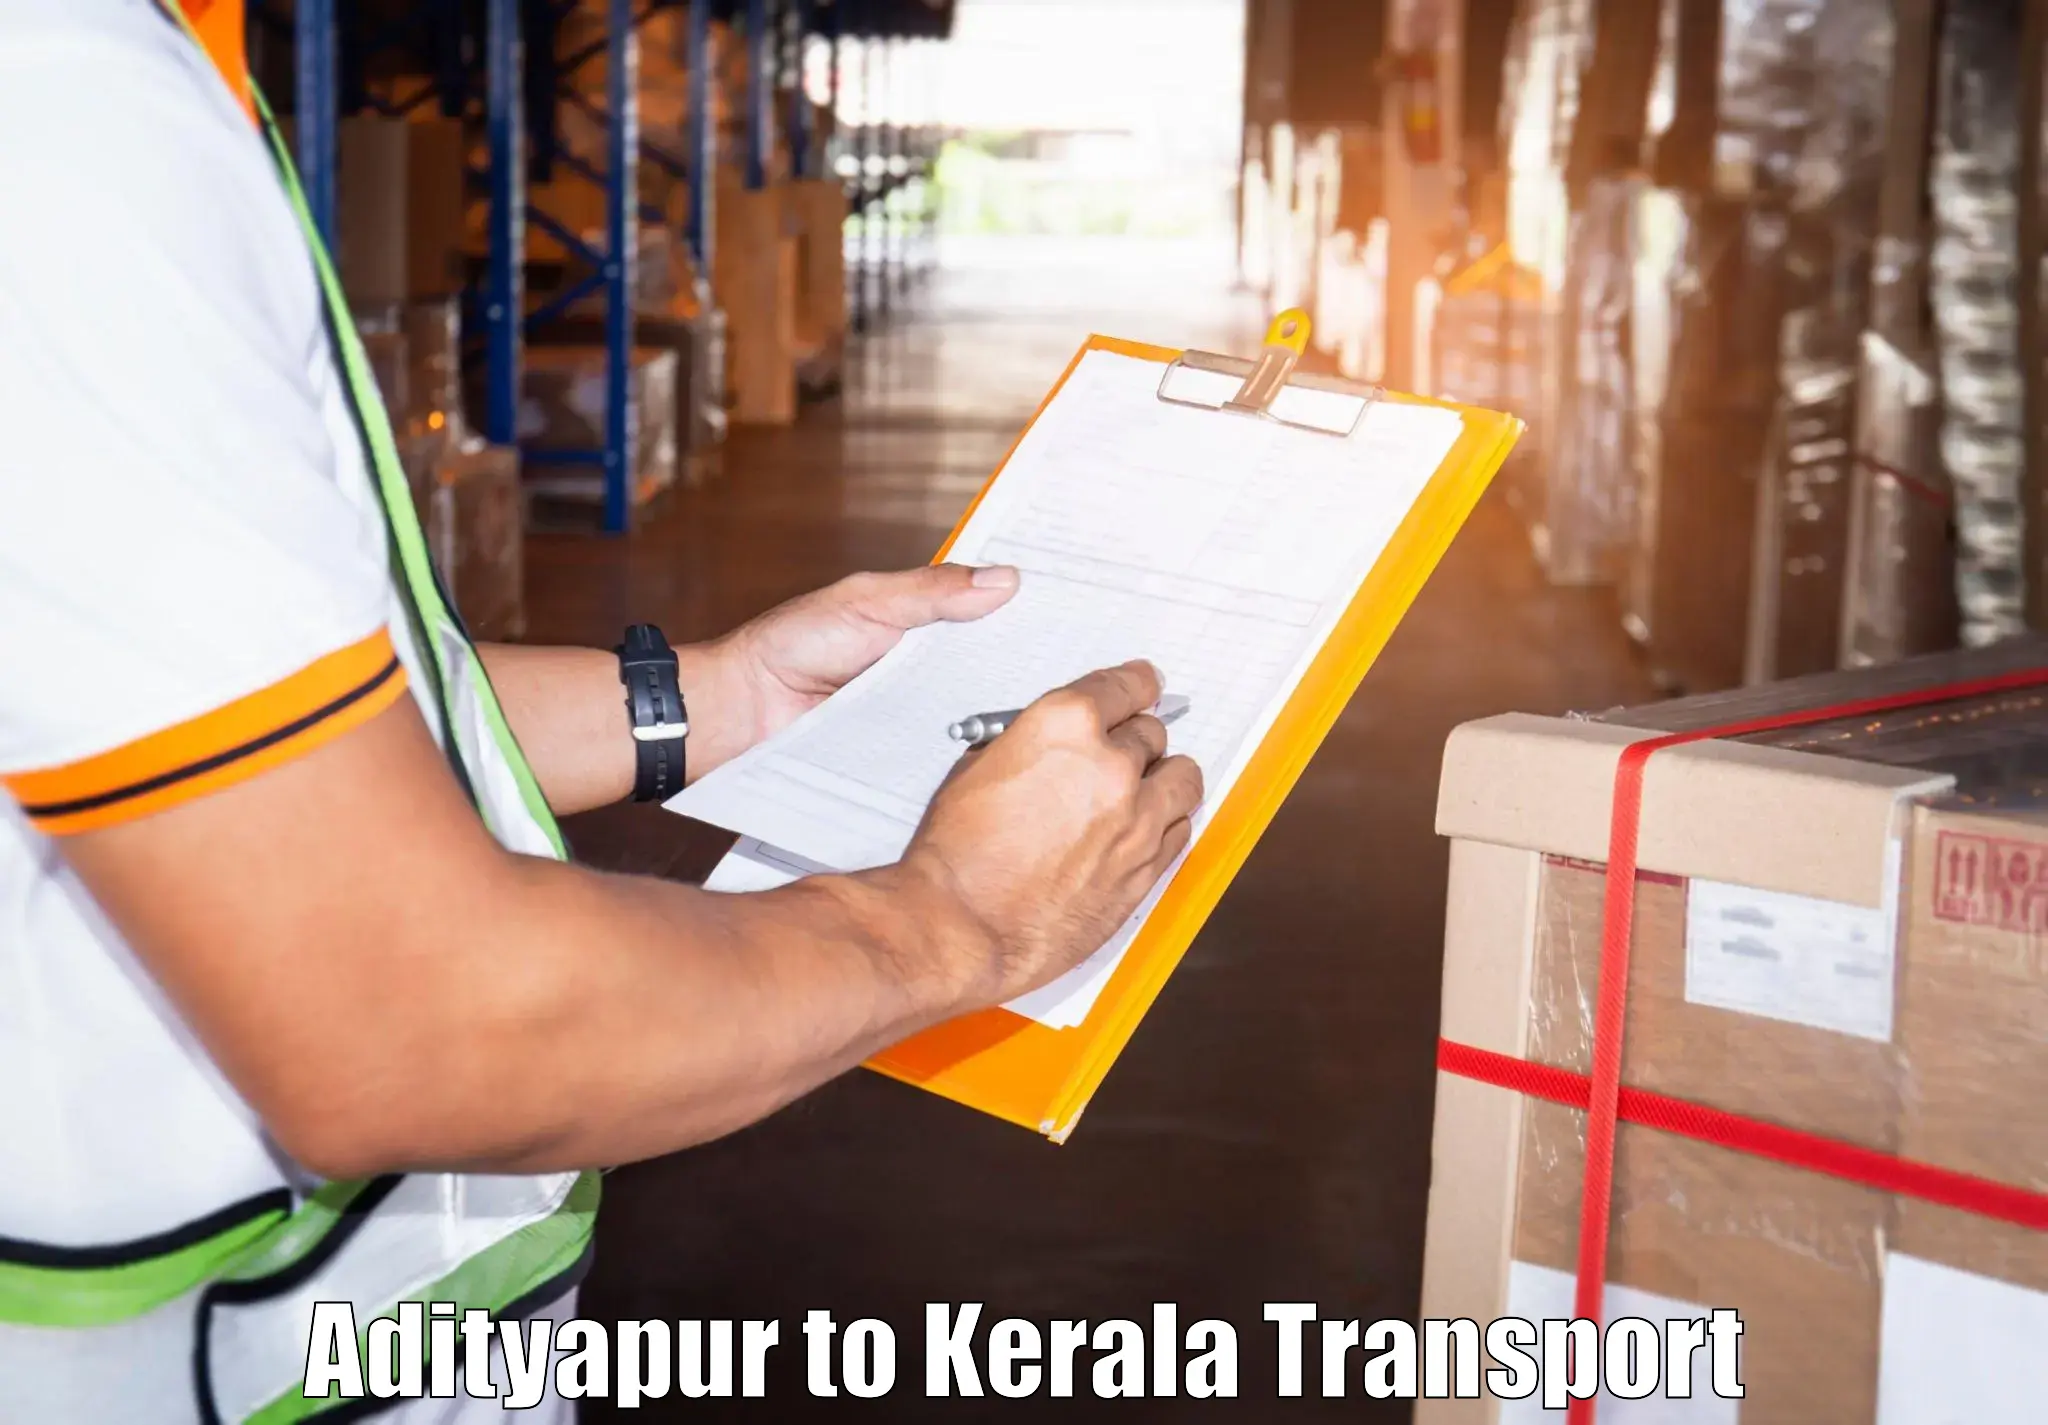 All India transport service Adityapur to Ponnani